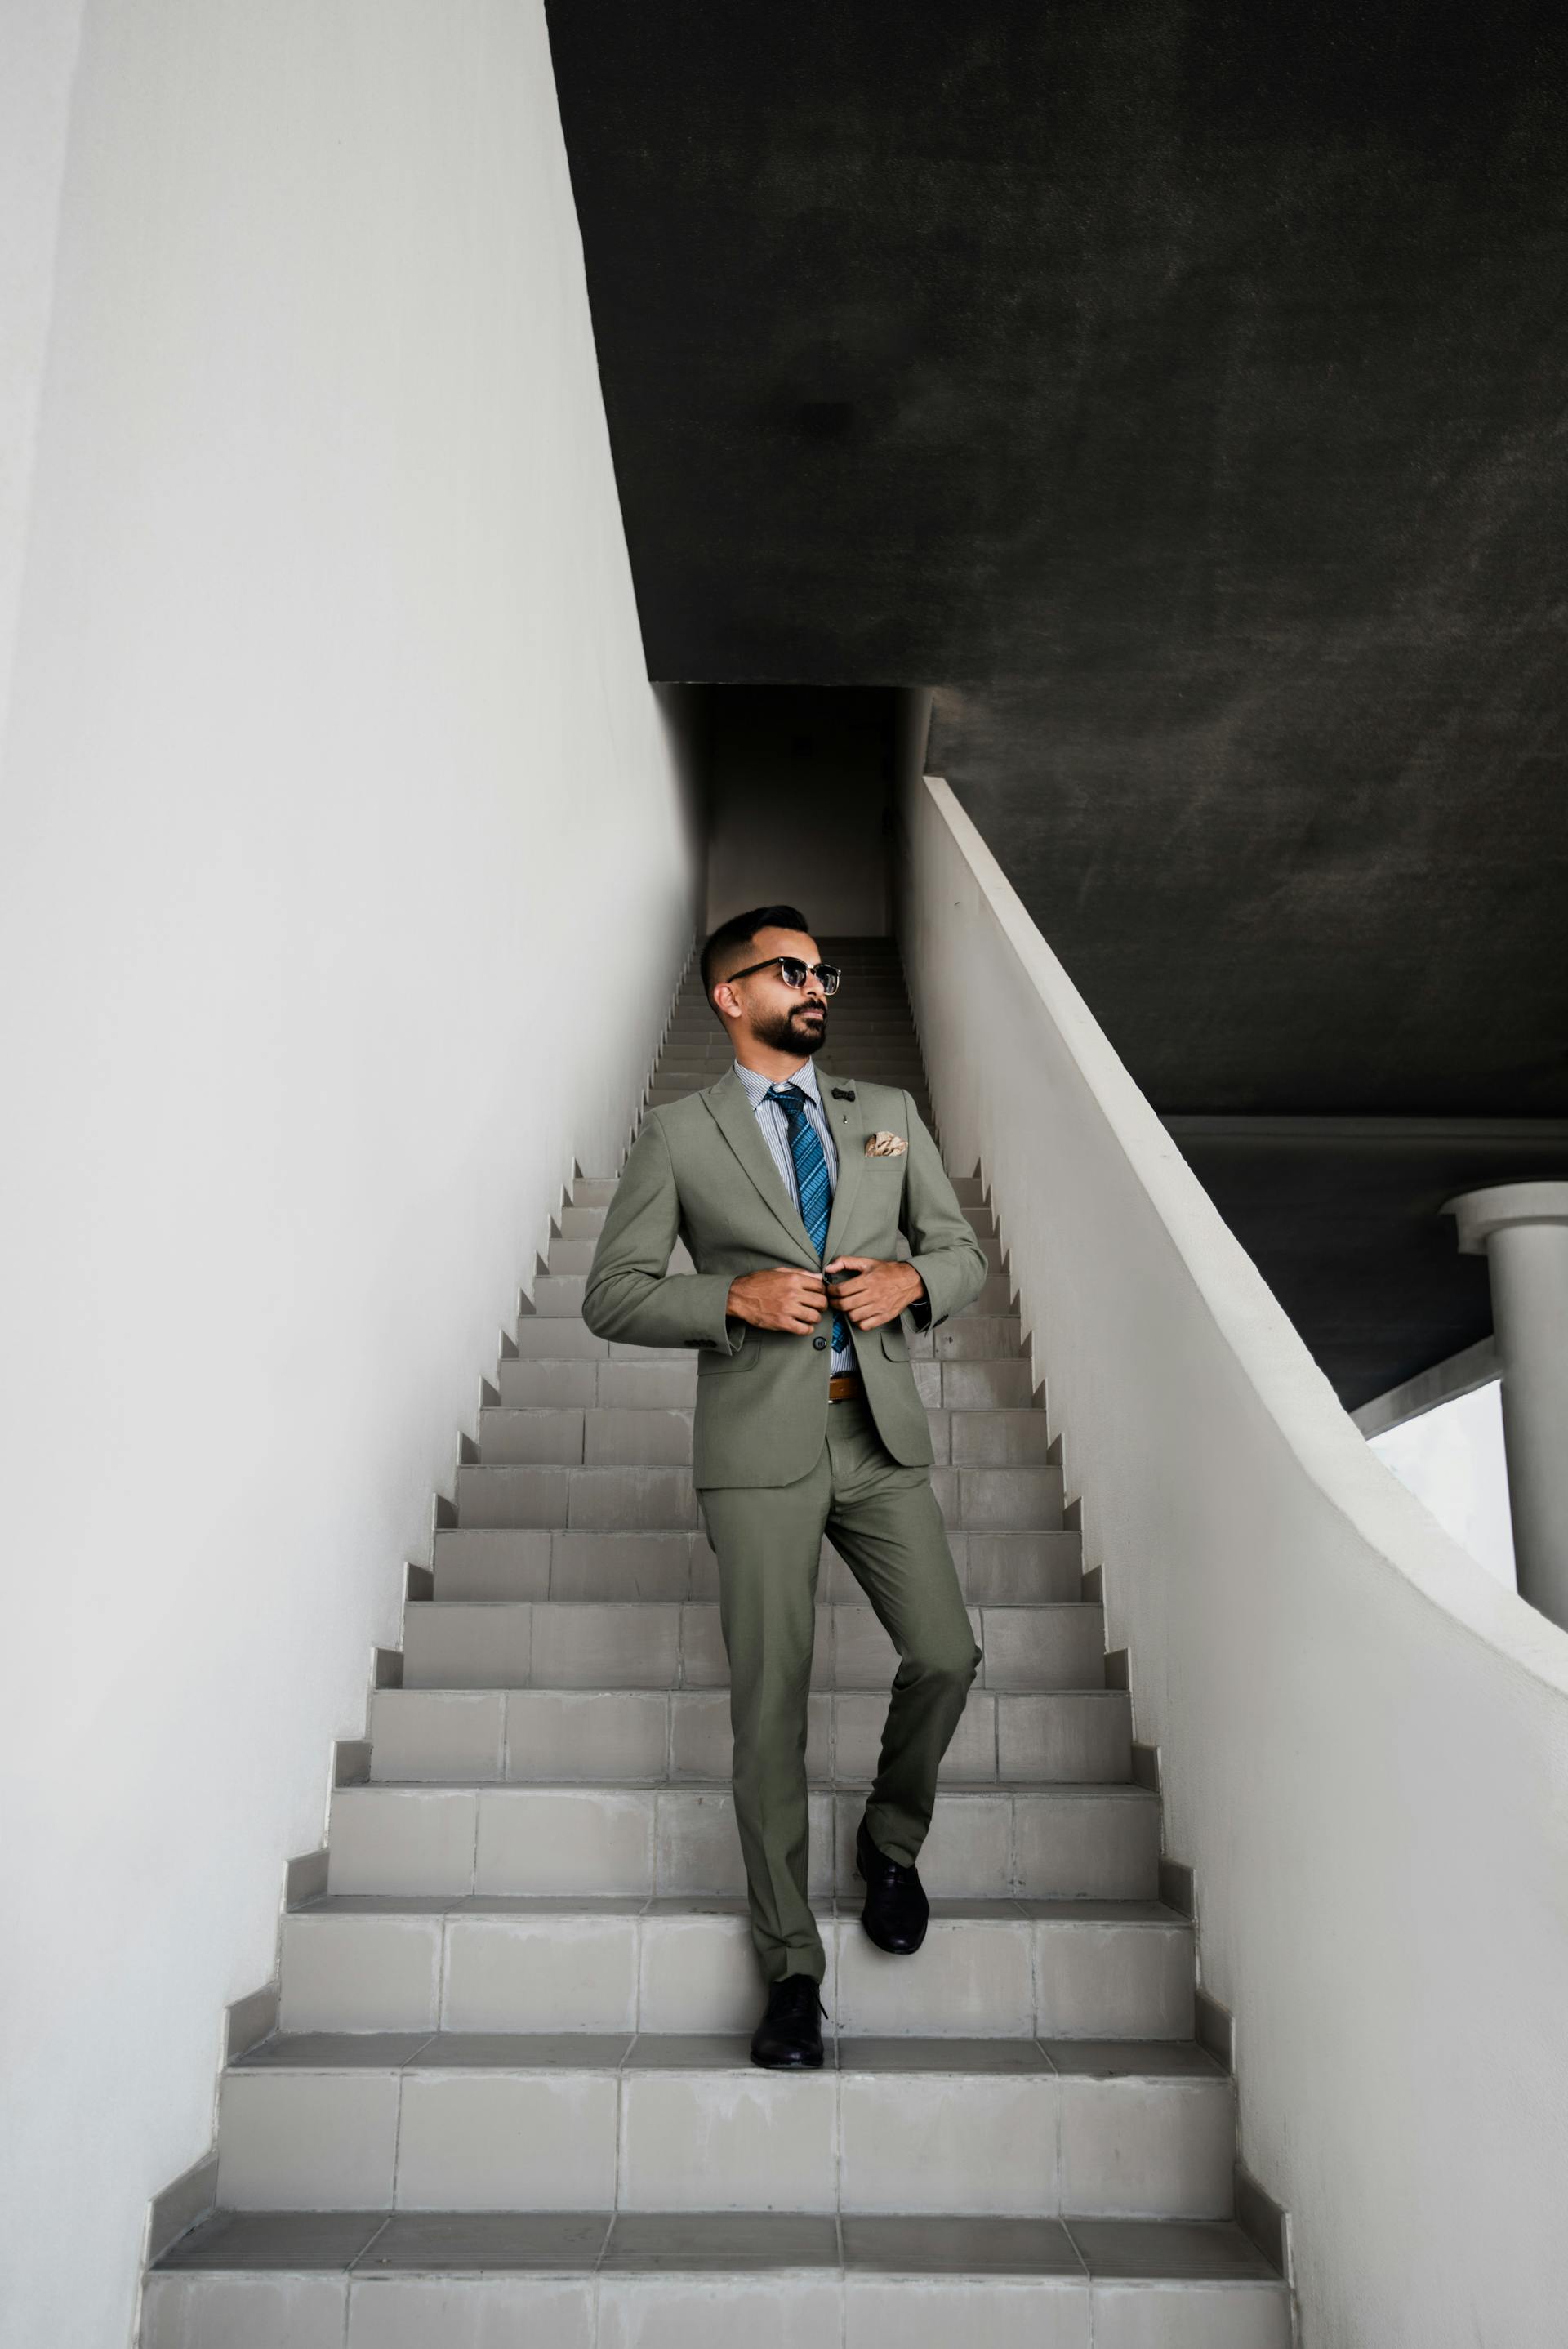 A man in a suit | Source: Pexels